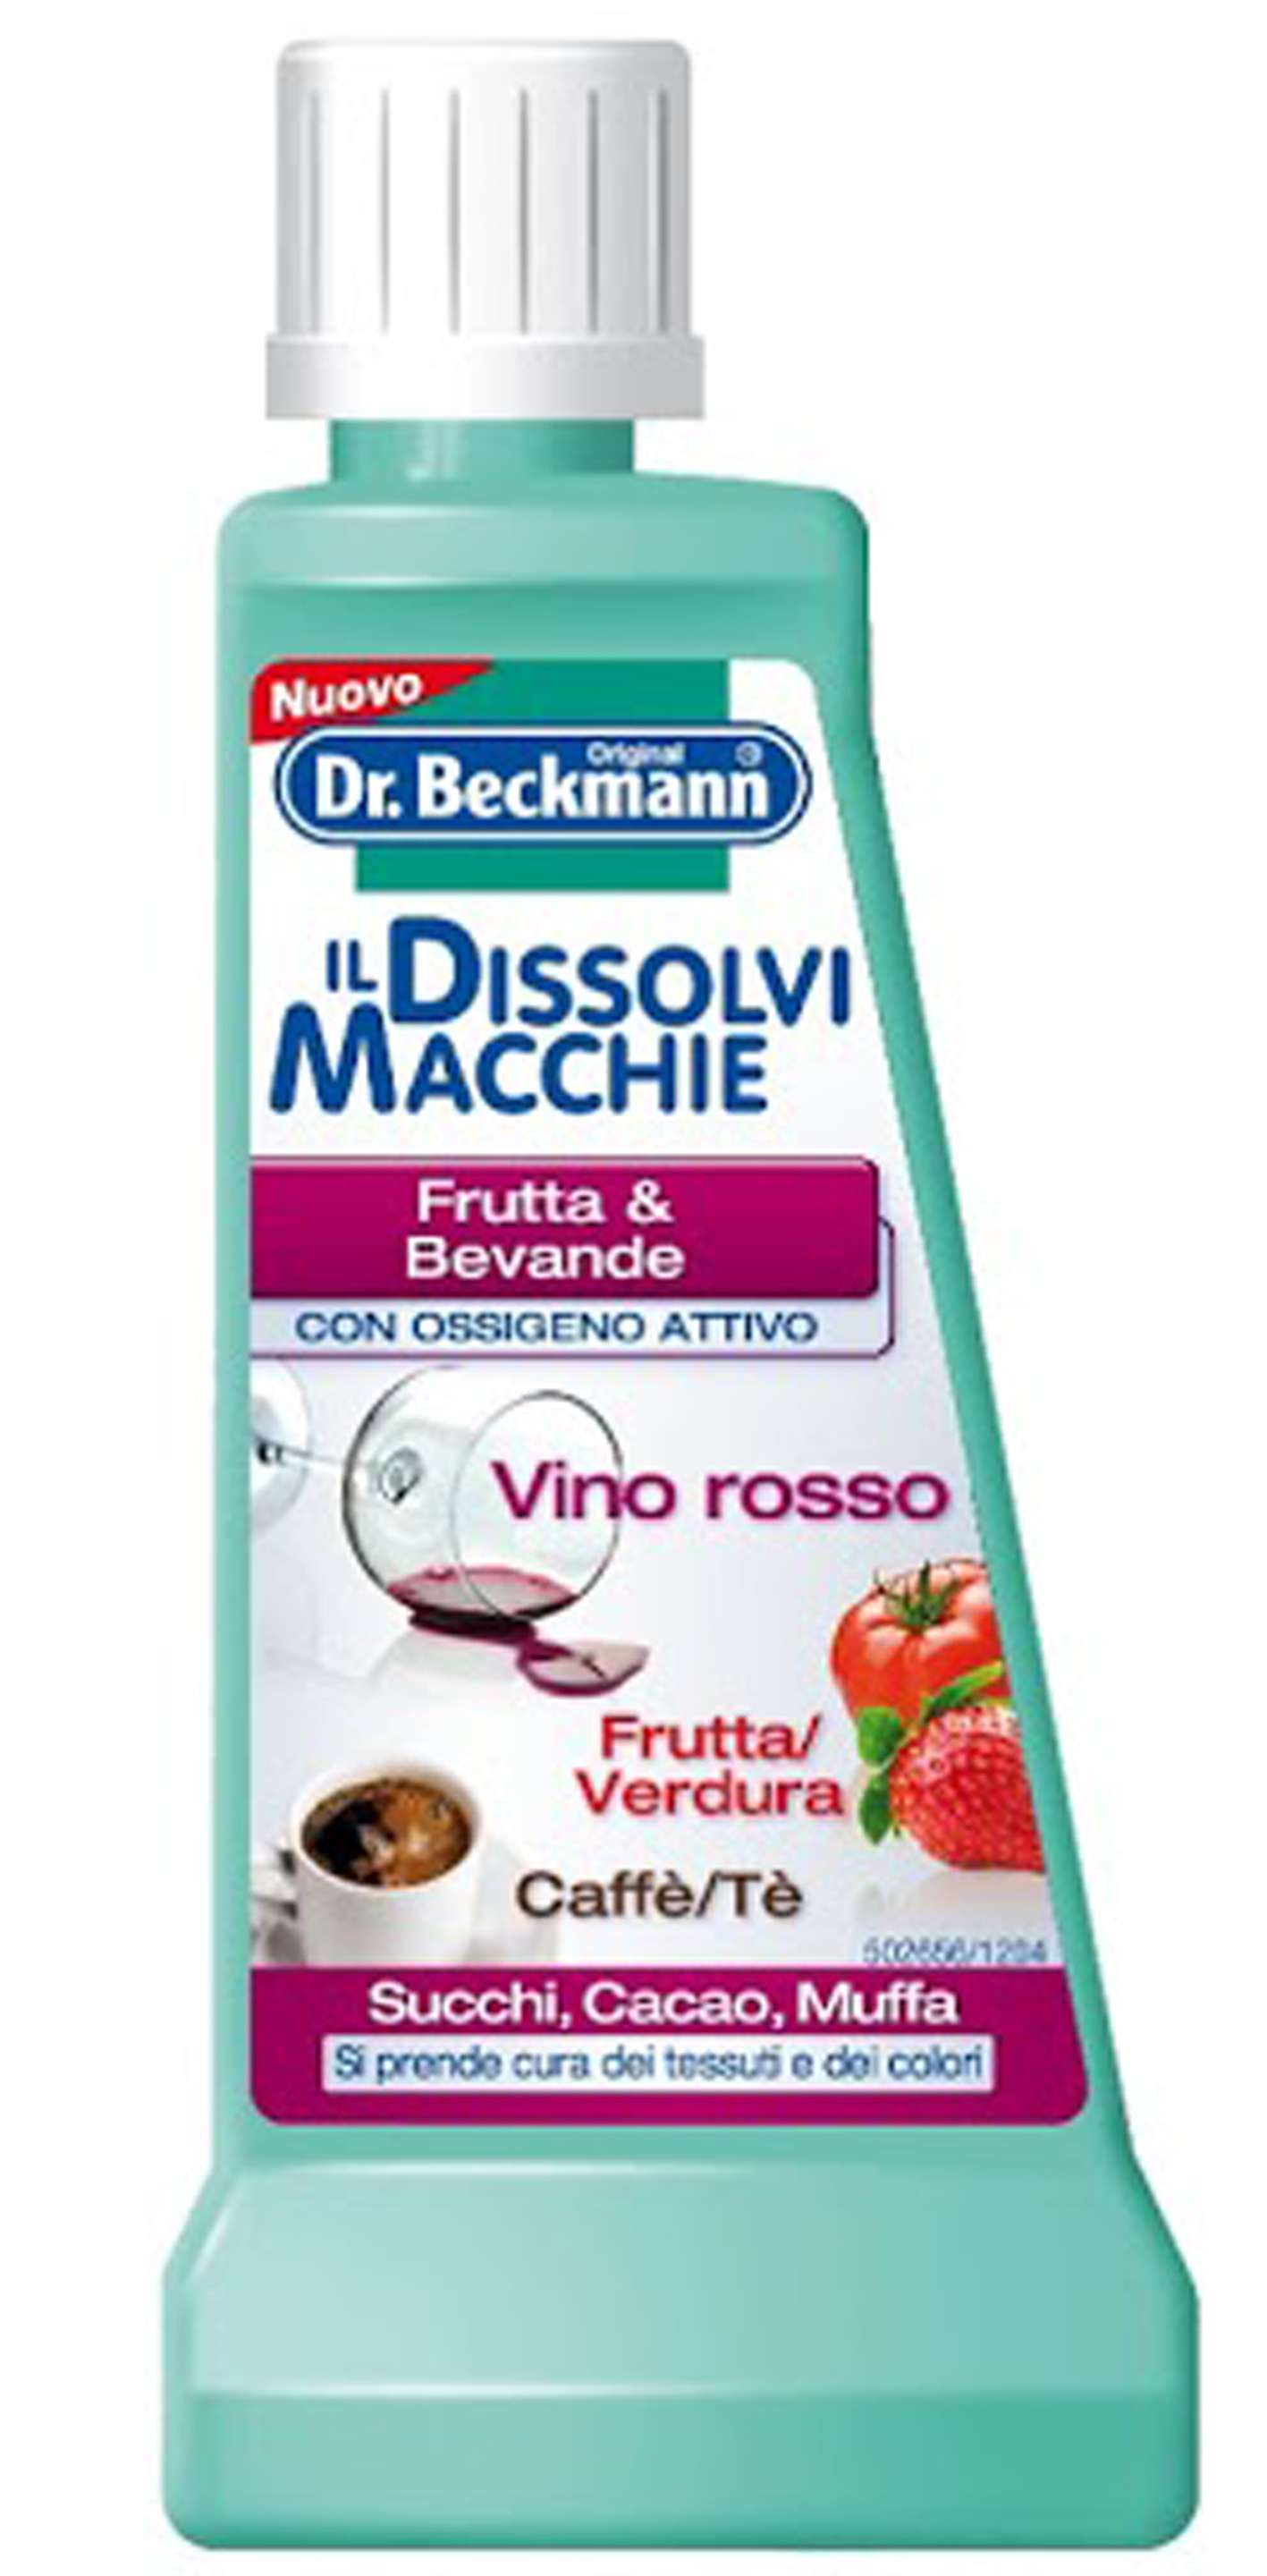 Frutta & Bevande SMACCHIATORE Dr. Beckmann - caffè - vino - macchie